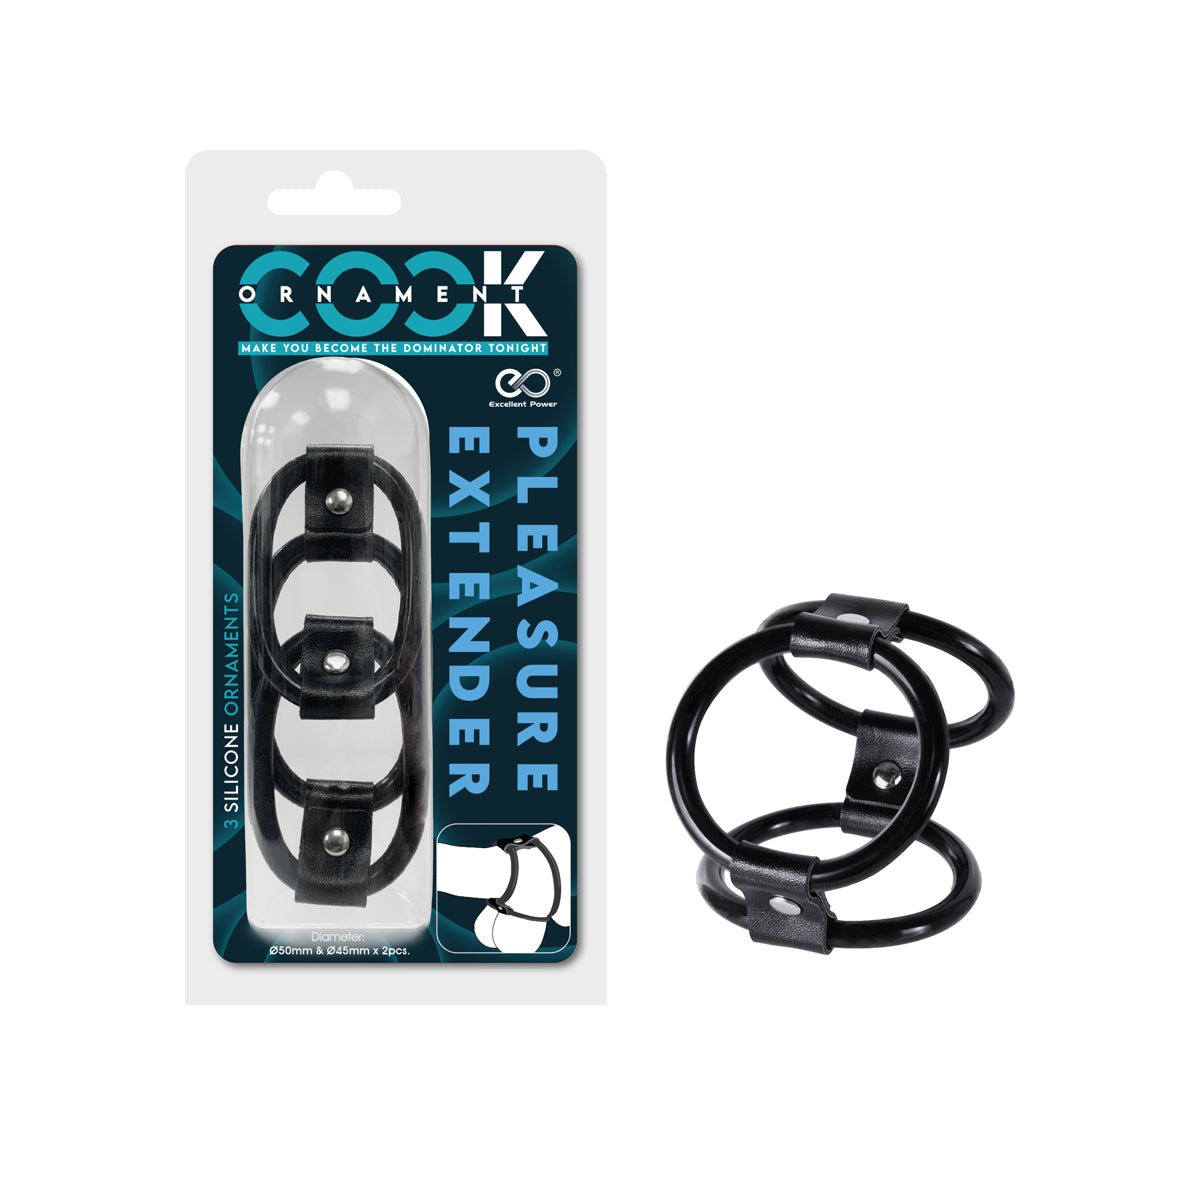 Excellent Power - Cock Ornament Pleasure Extender Silicone Triple Cock Ring – Black